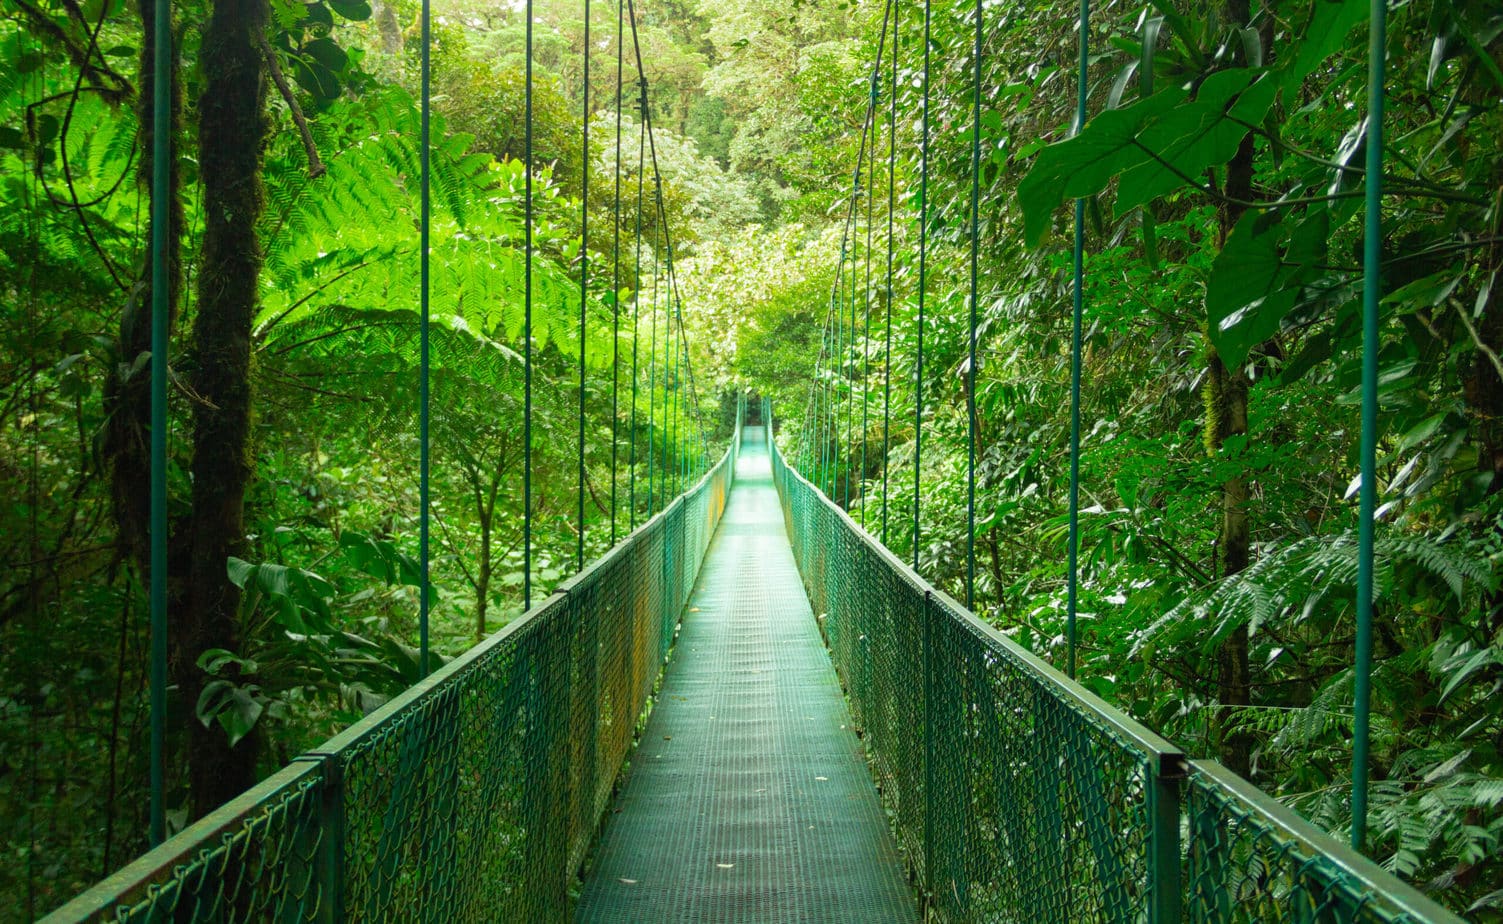 Hanging Bridges Costa Rica: Family Travel Guide